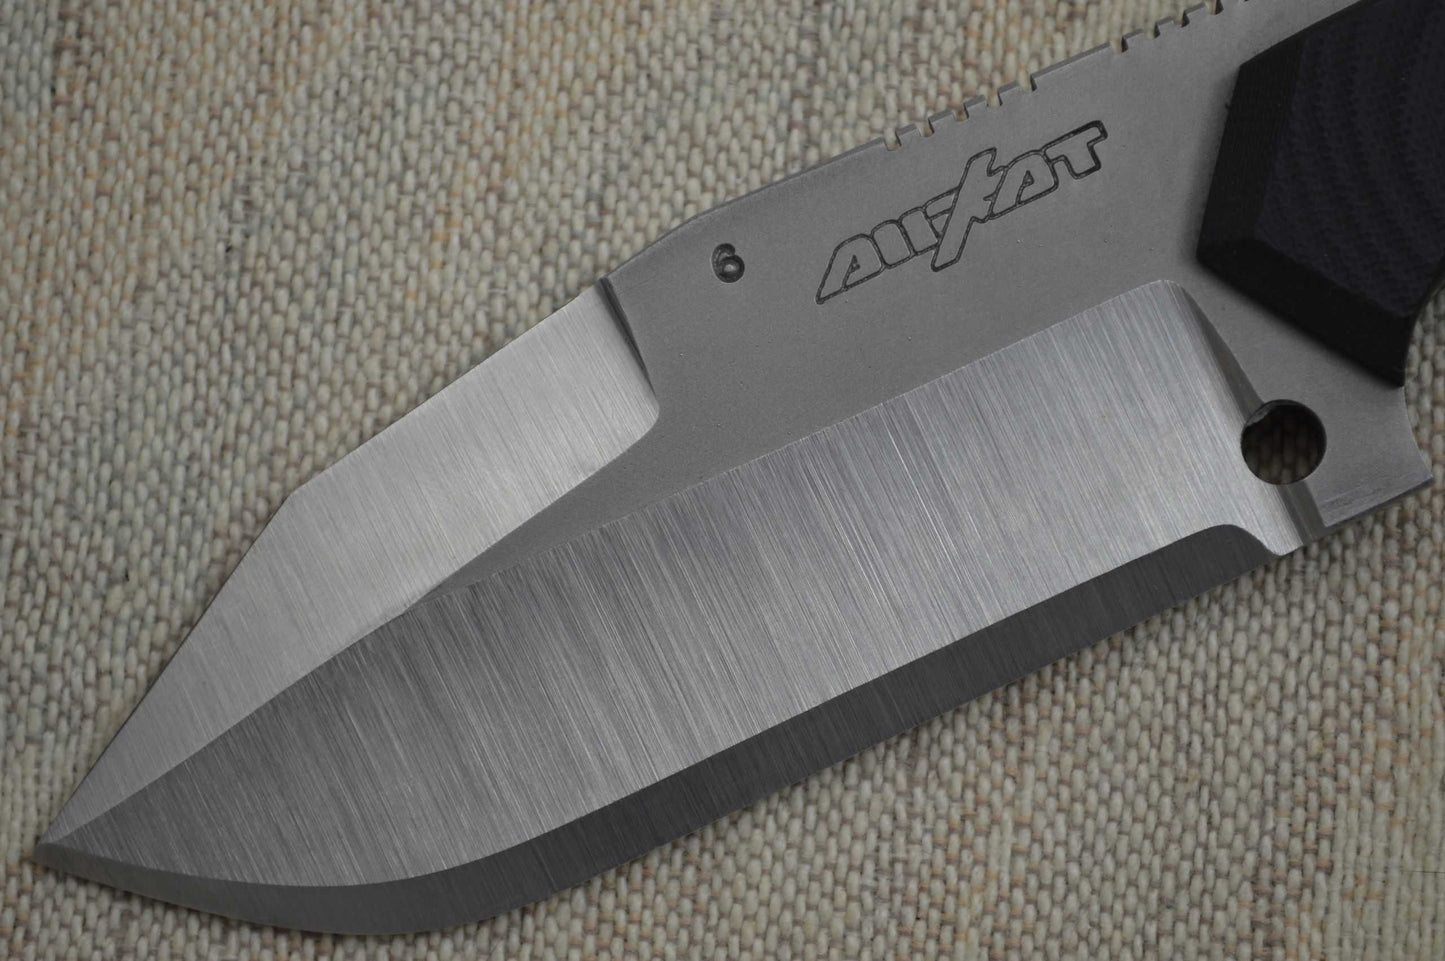 Dwaine Carrillo AIRKAT VULCAN Model 6, Tactical Fixed Blade, Kydex Sheath